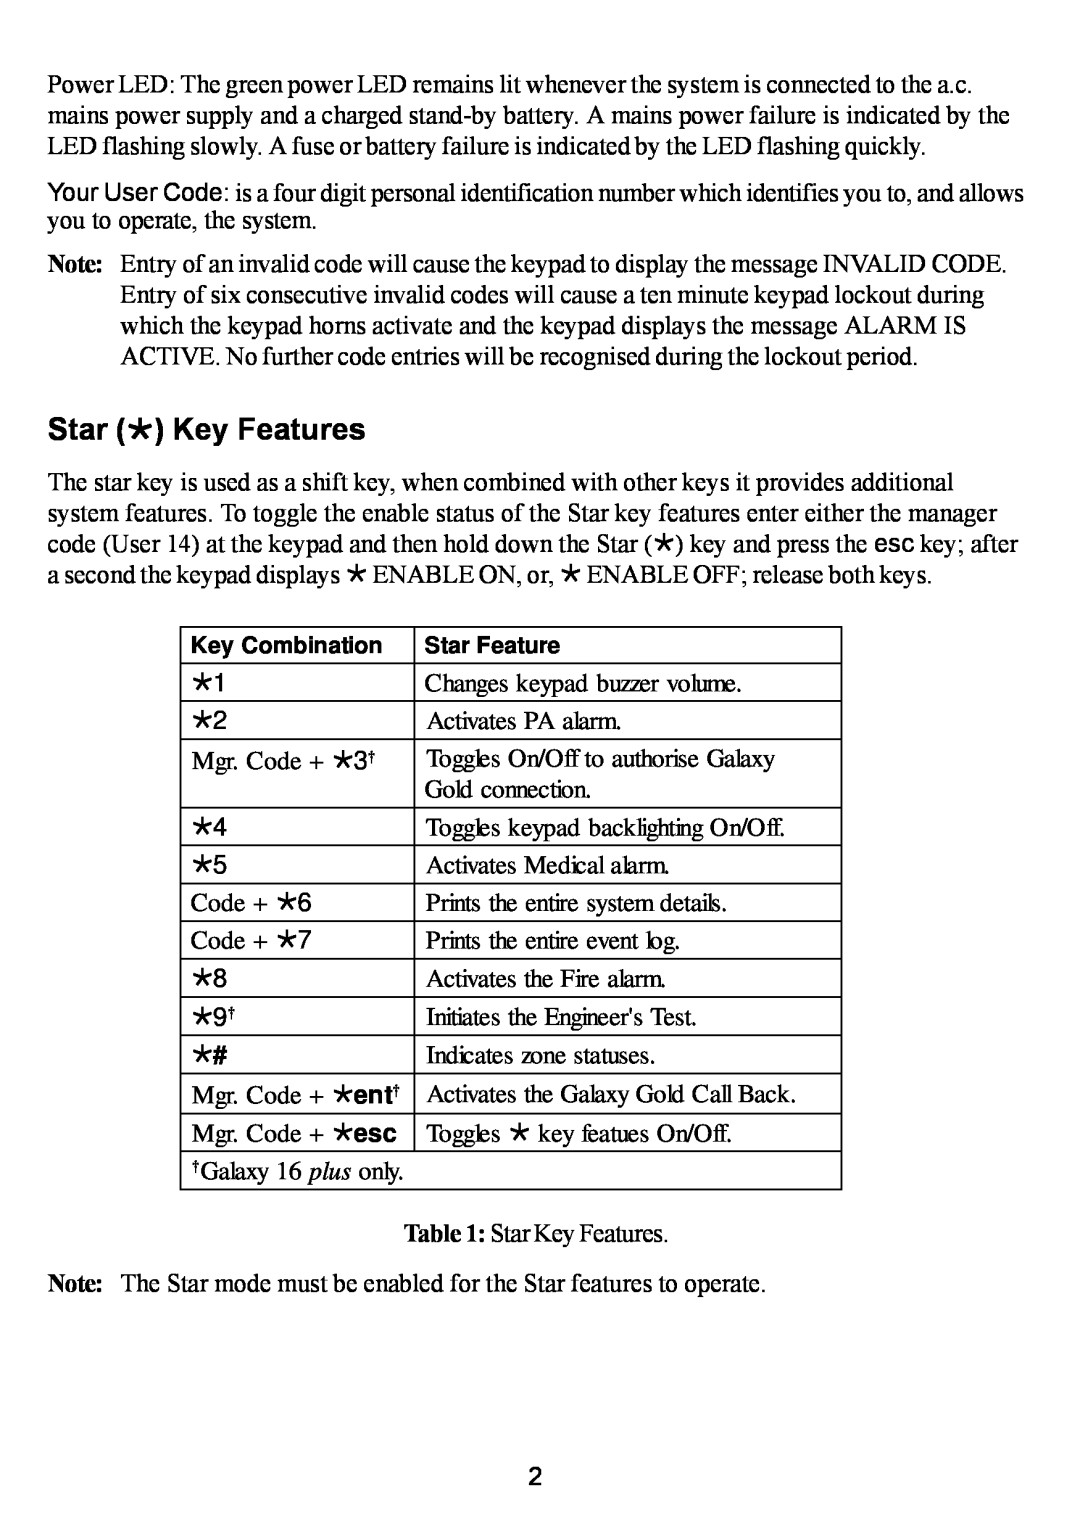 Honeywell 16 Plus manual Star ¸ Key Features 